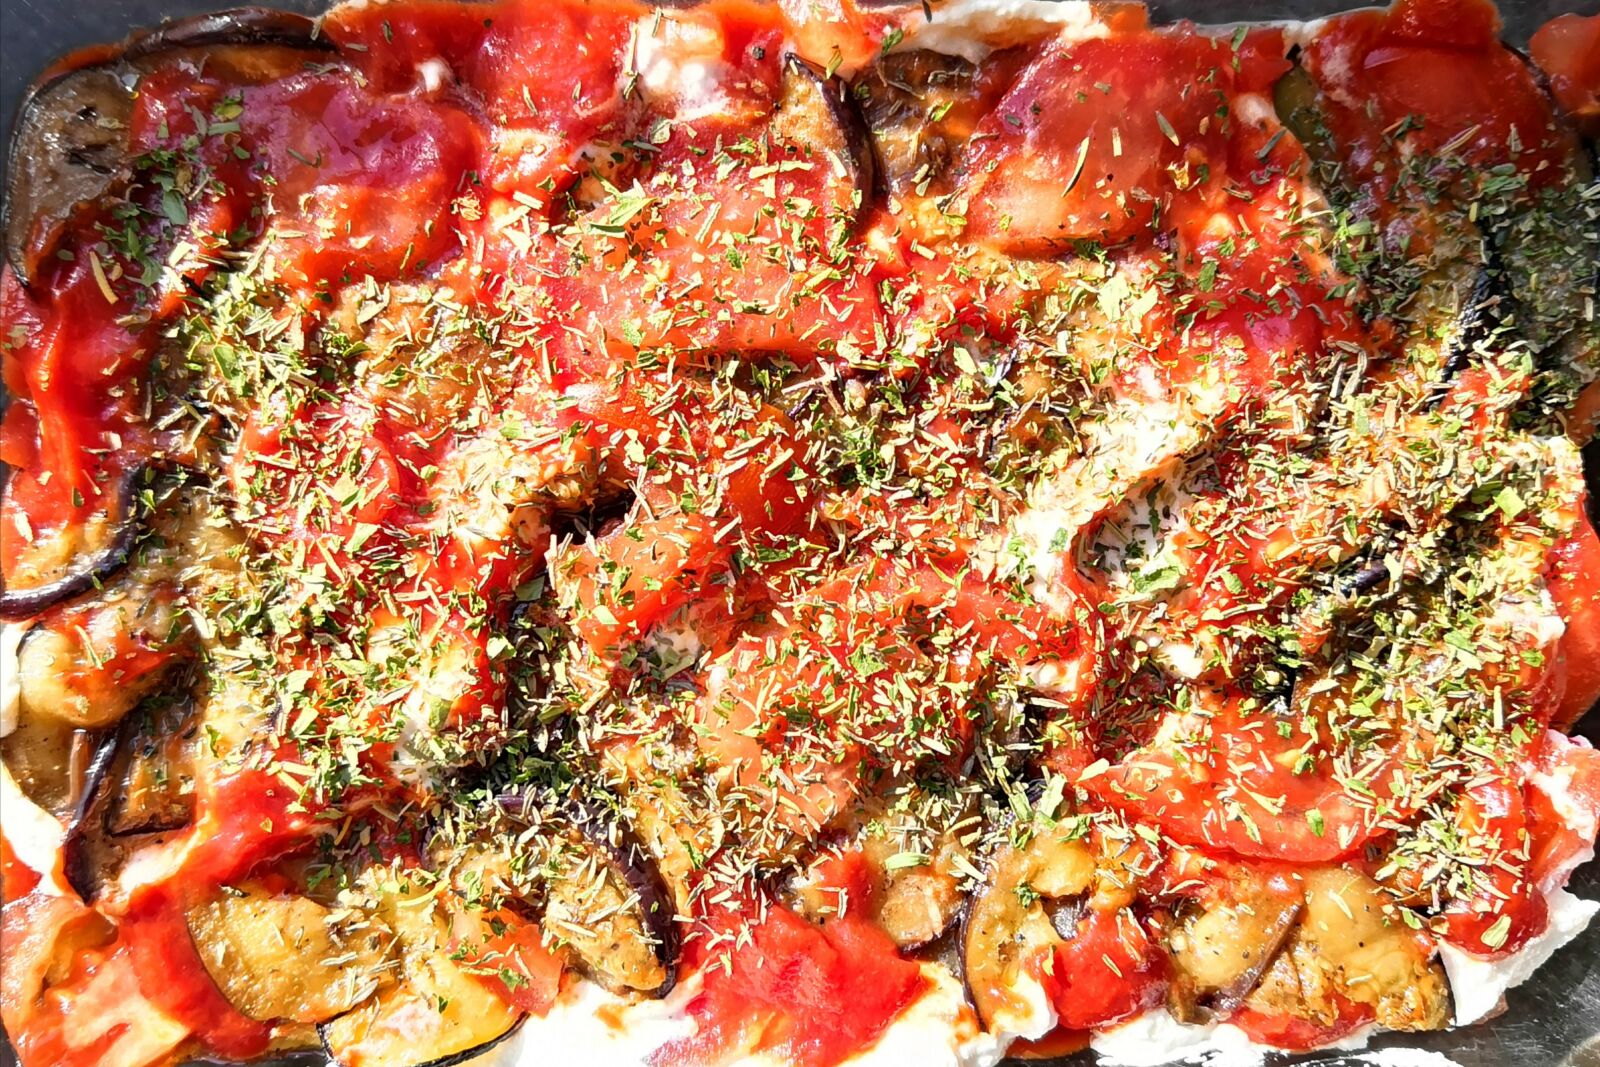 HUAWEI Mate 10 Pro sample photo. Eggplant, tomatoes, paprika photography